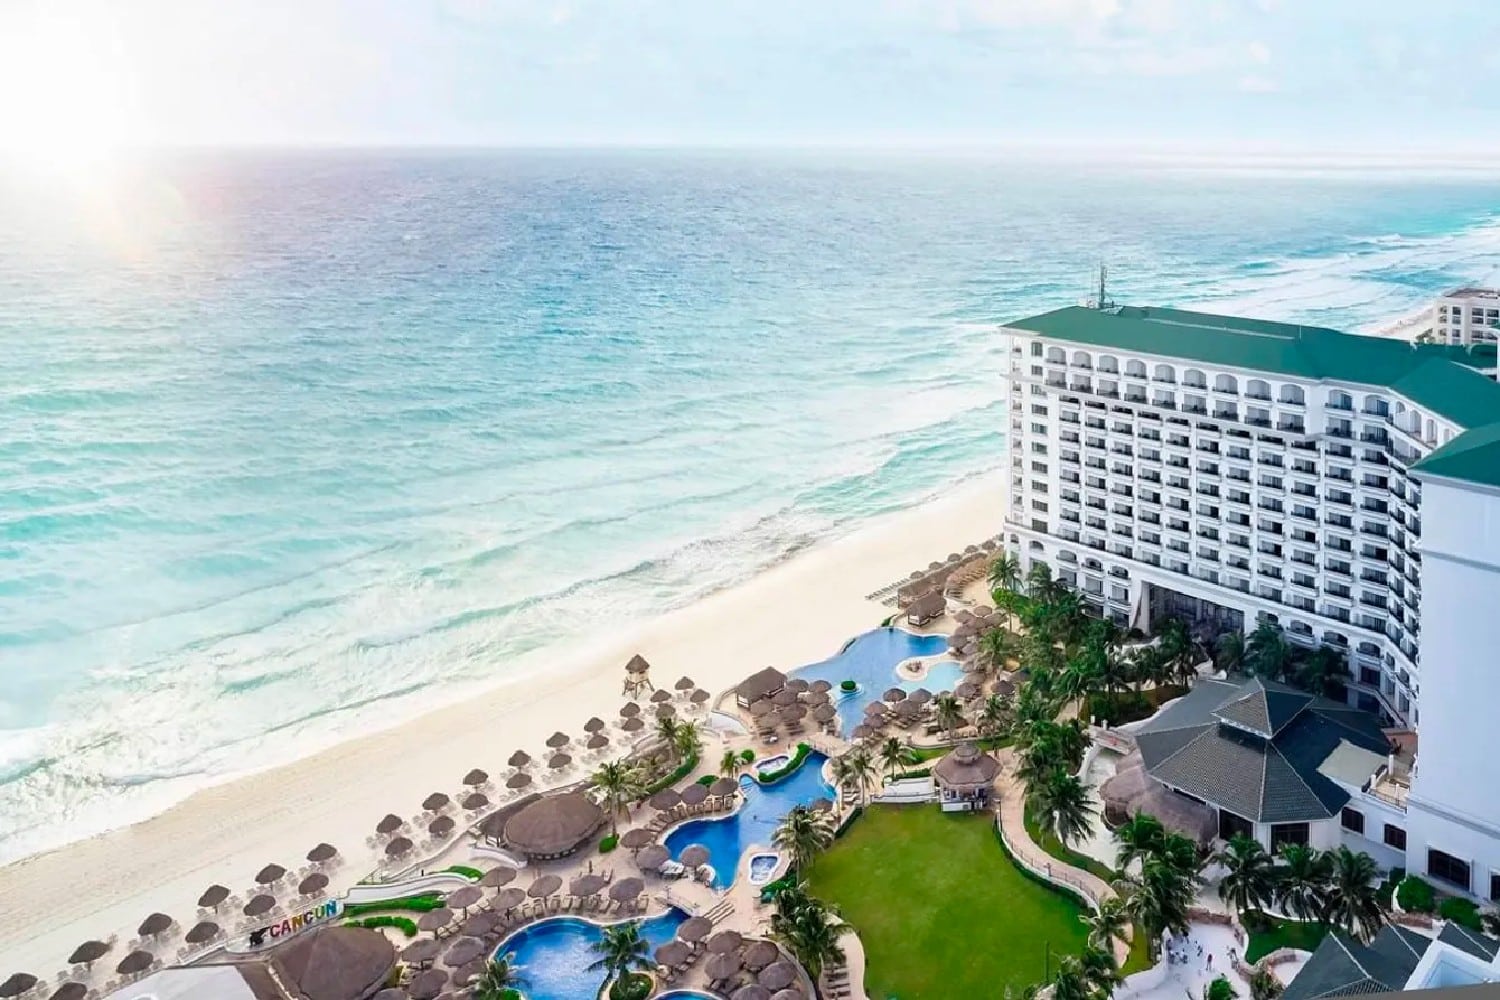 jw marriott resort on the beach in cancun